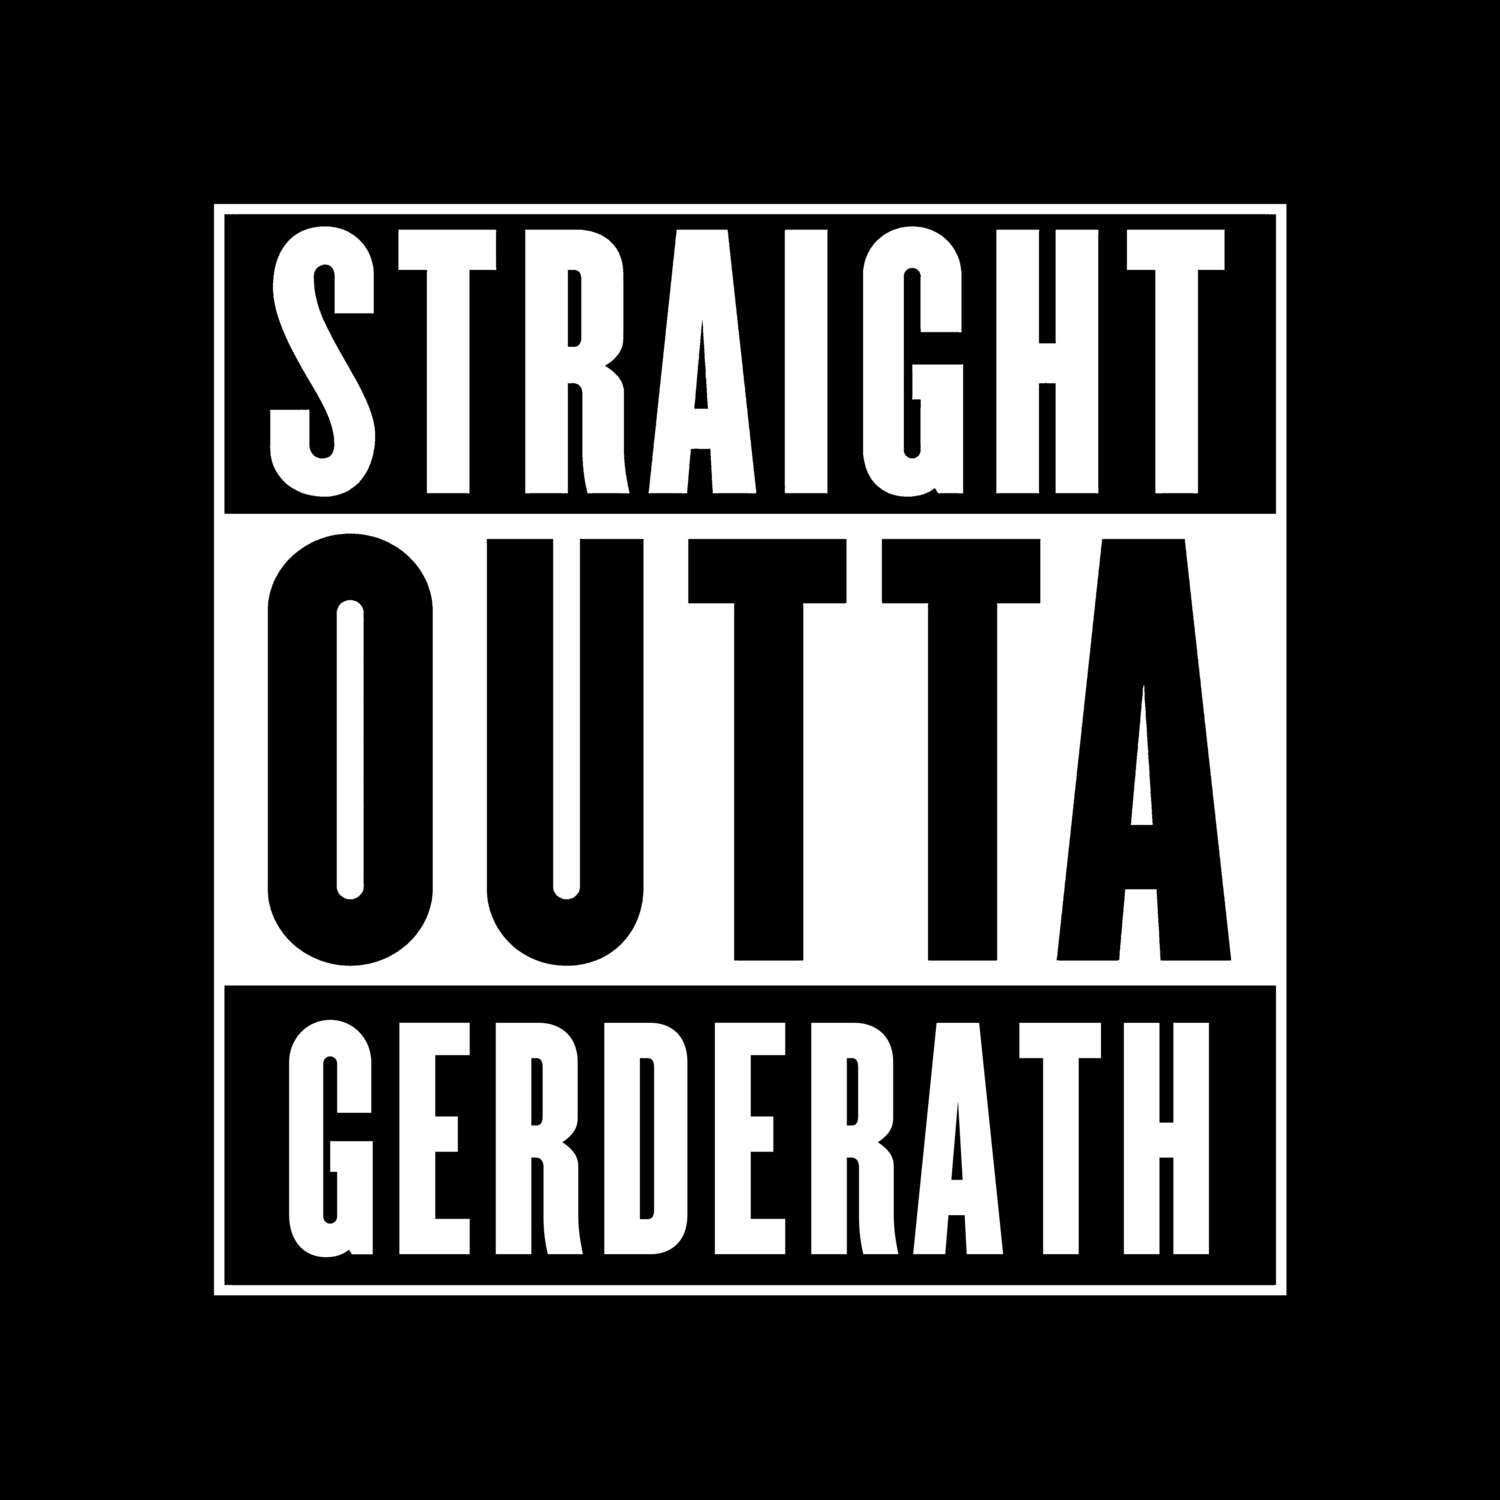 Gerderath T-Shirt »Straight Outta«